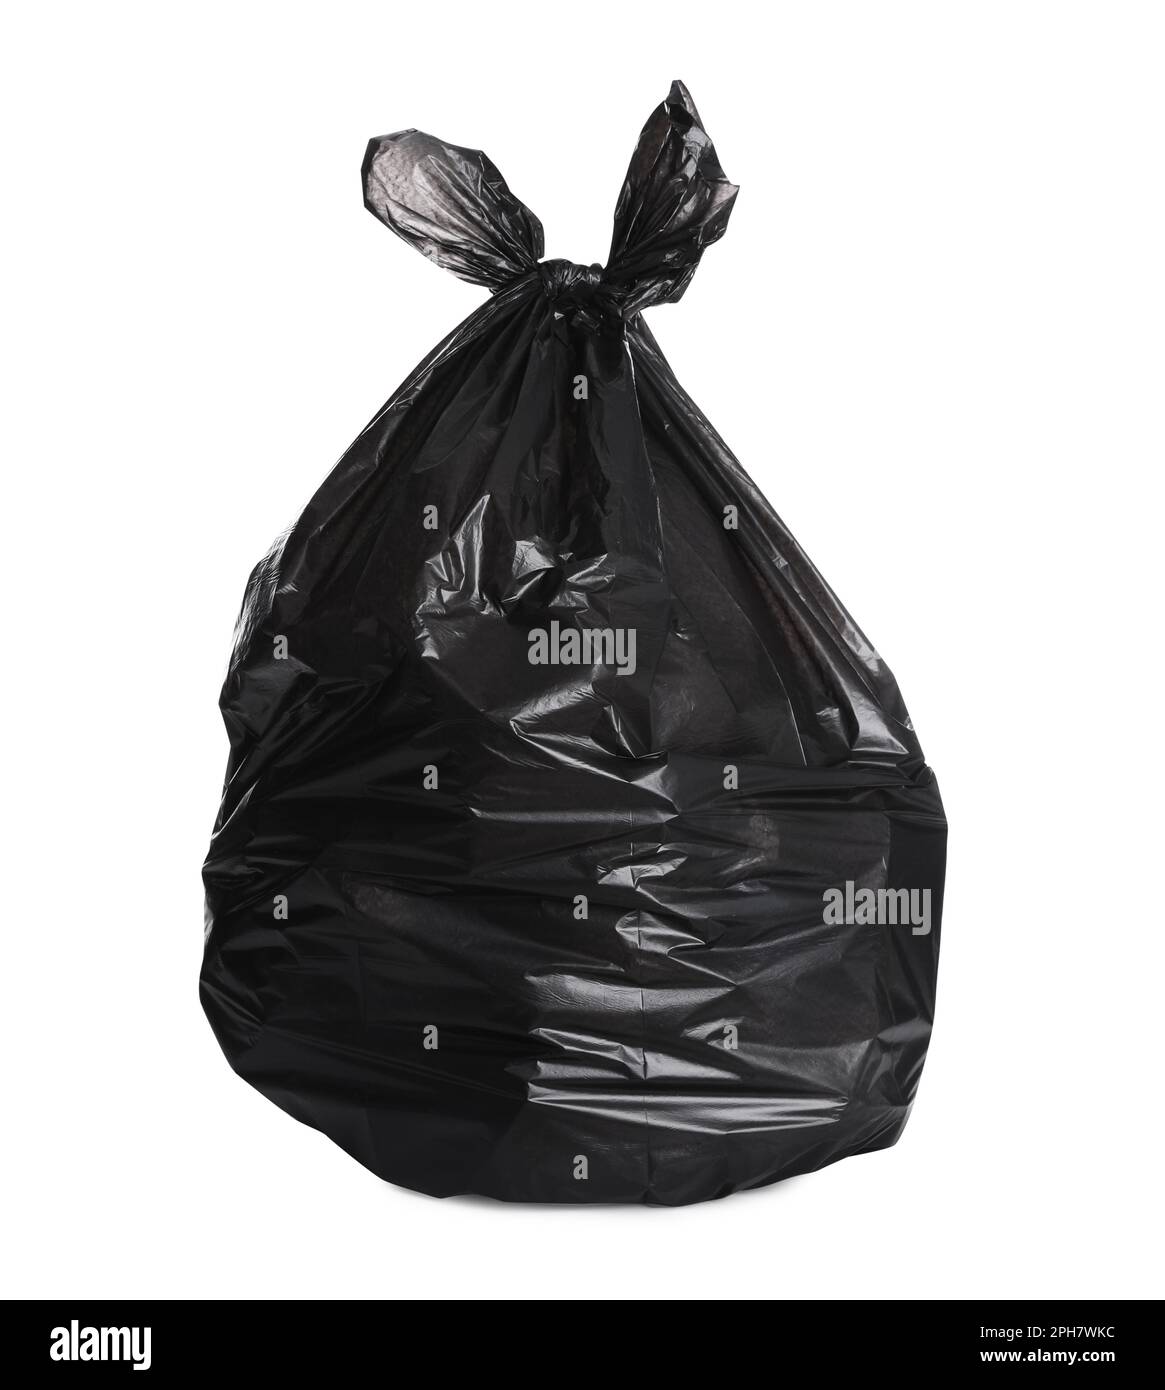 https://c8.alamy.com/comp/2PH7WKC/full-black-garbage-bag-isolated-on-white-rubbish-recycling-2PH7WKC.jpg